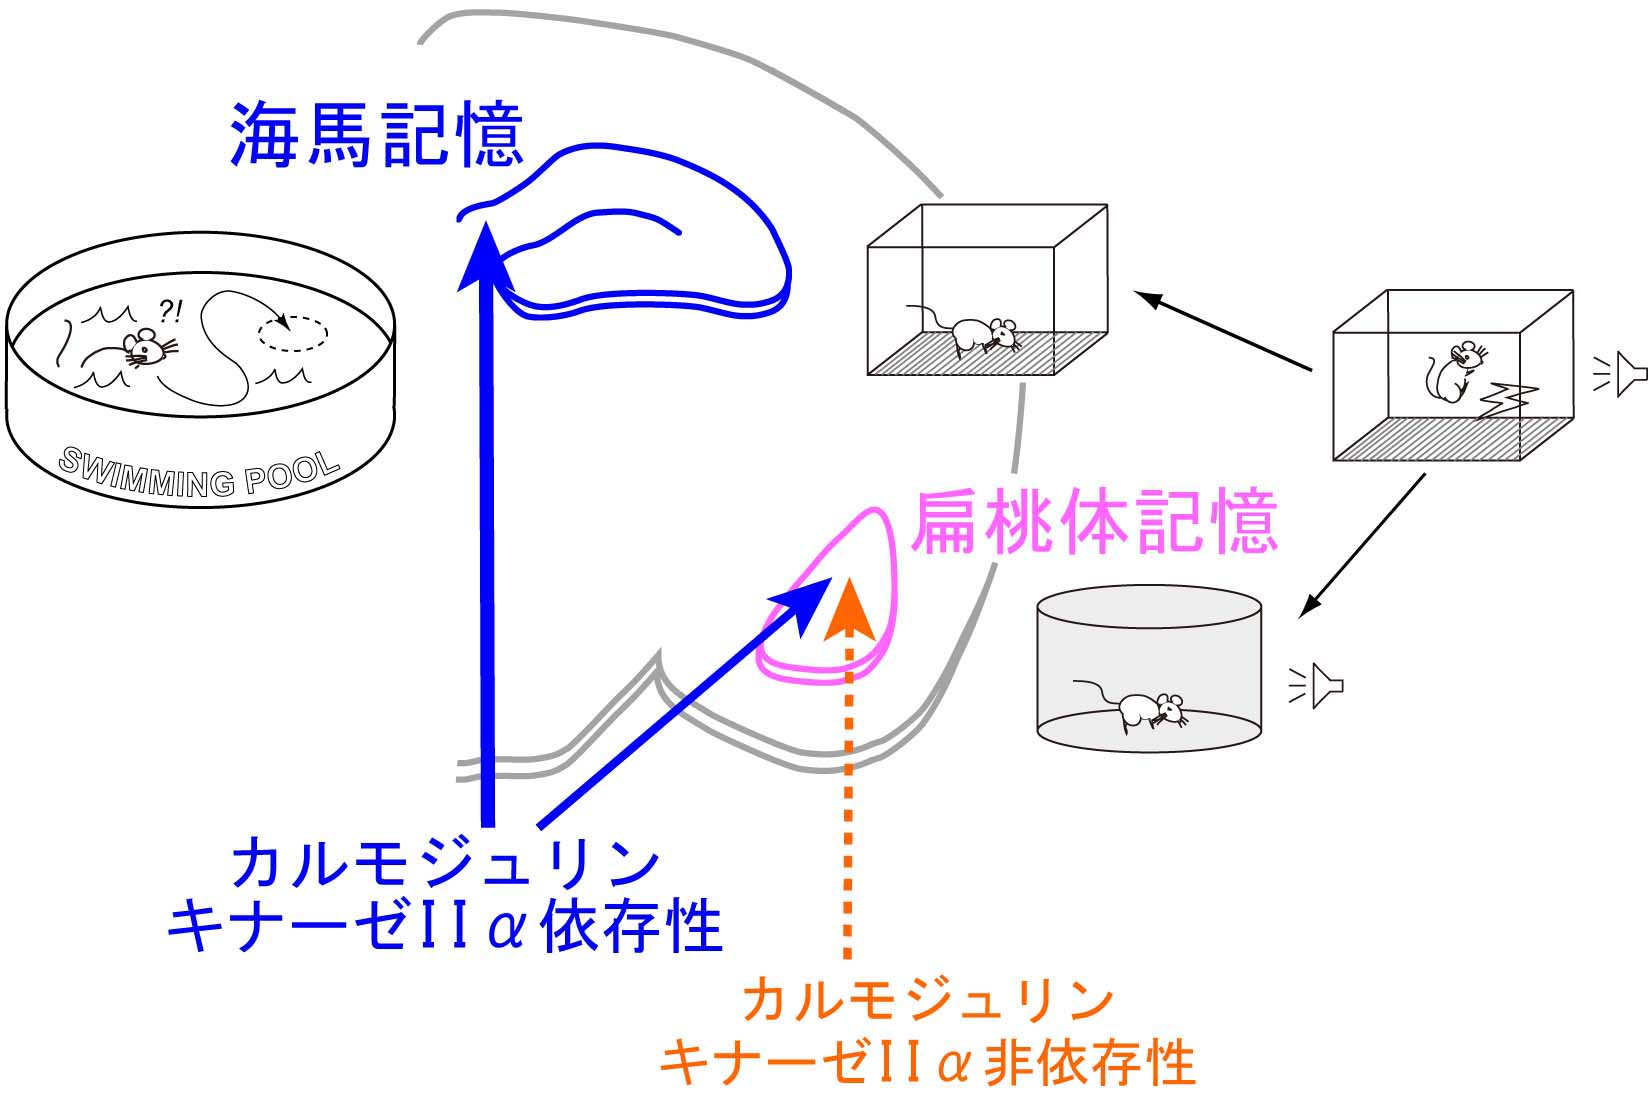 NIPS Research_Fig_Yamagata_J.jpg